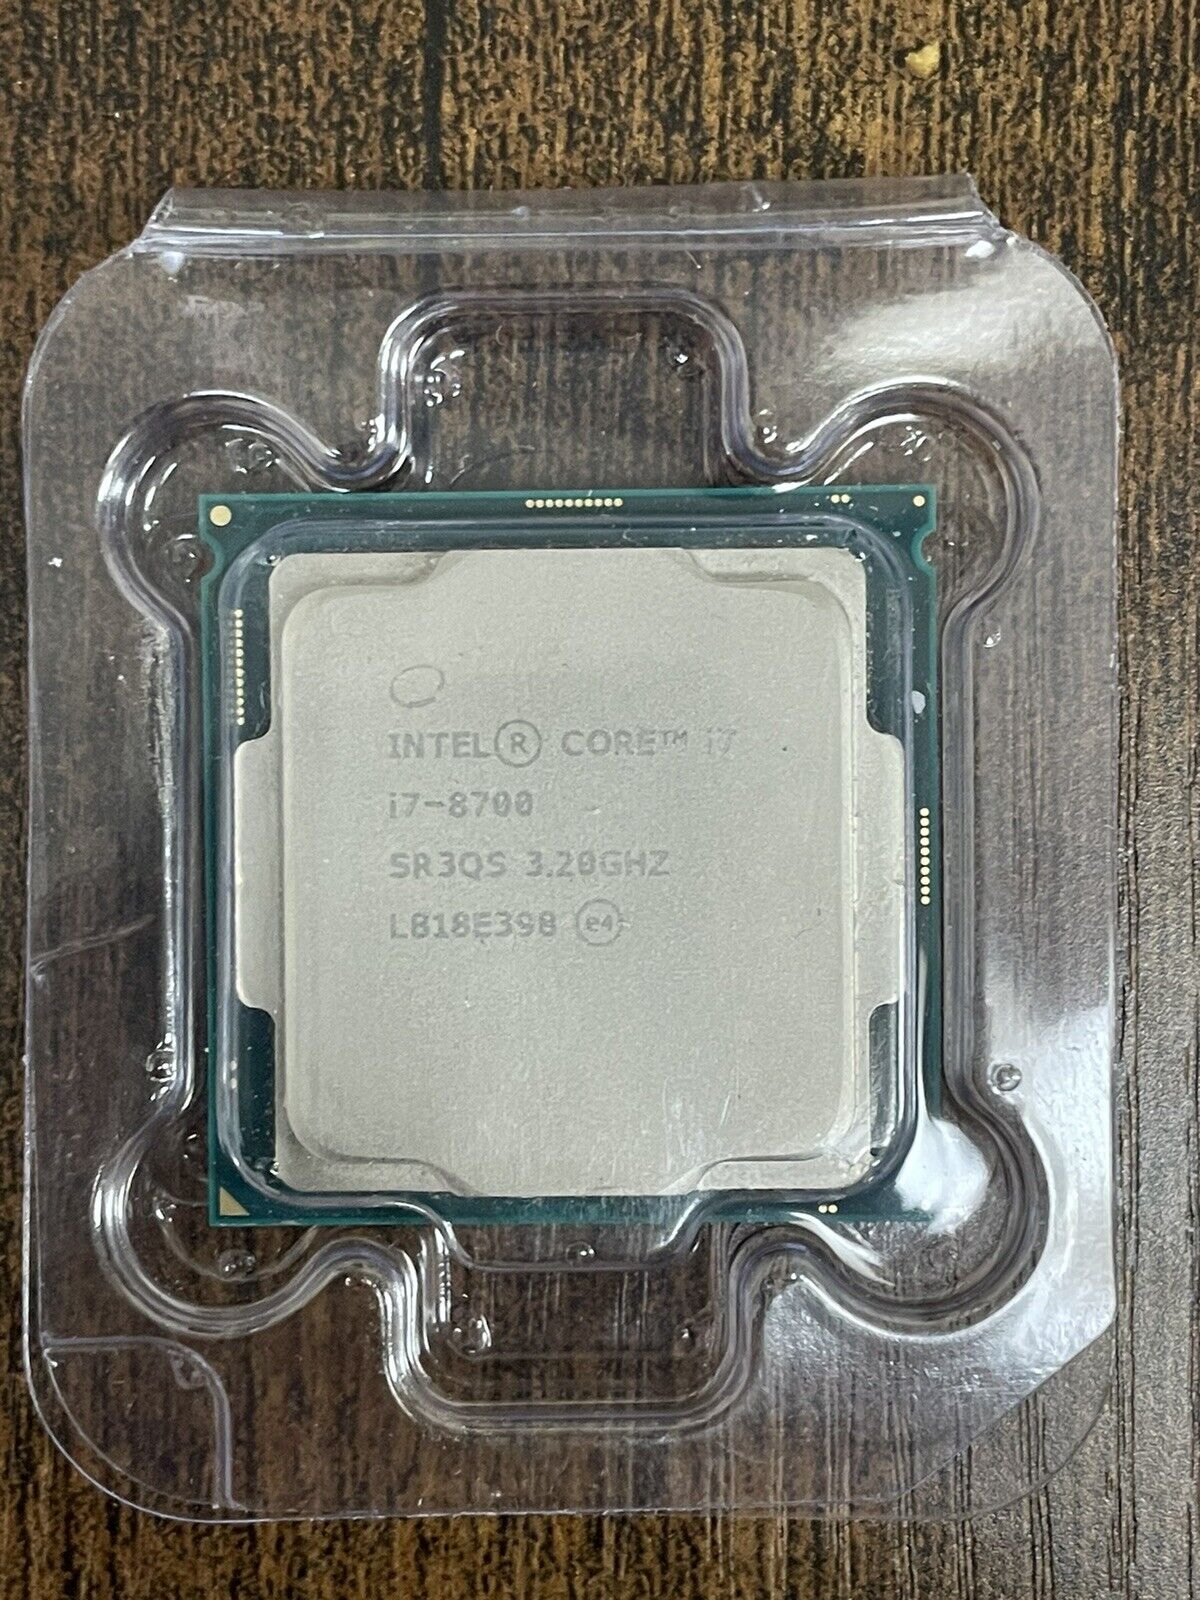 Intel SR3QS Core i7-8700 3.20GHz 12M 6-Core Socket 1151 CPU Processor *Tested*